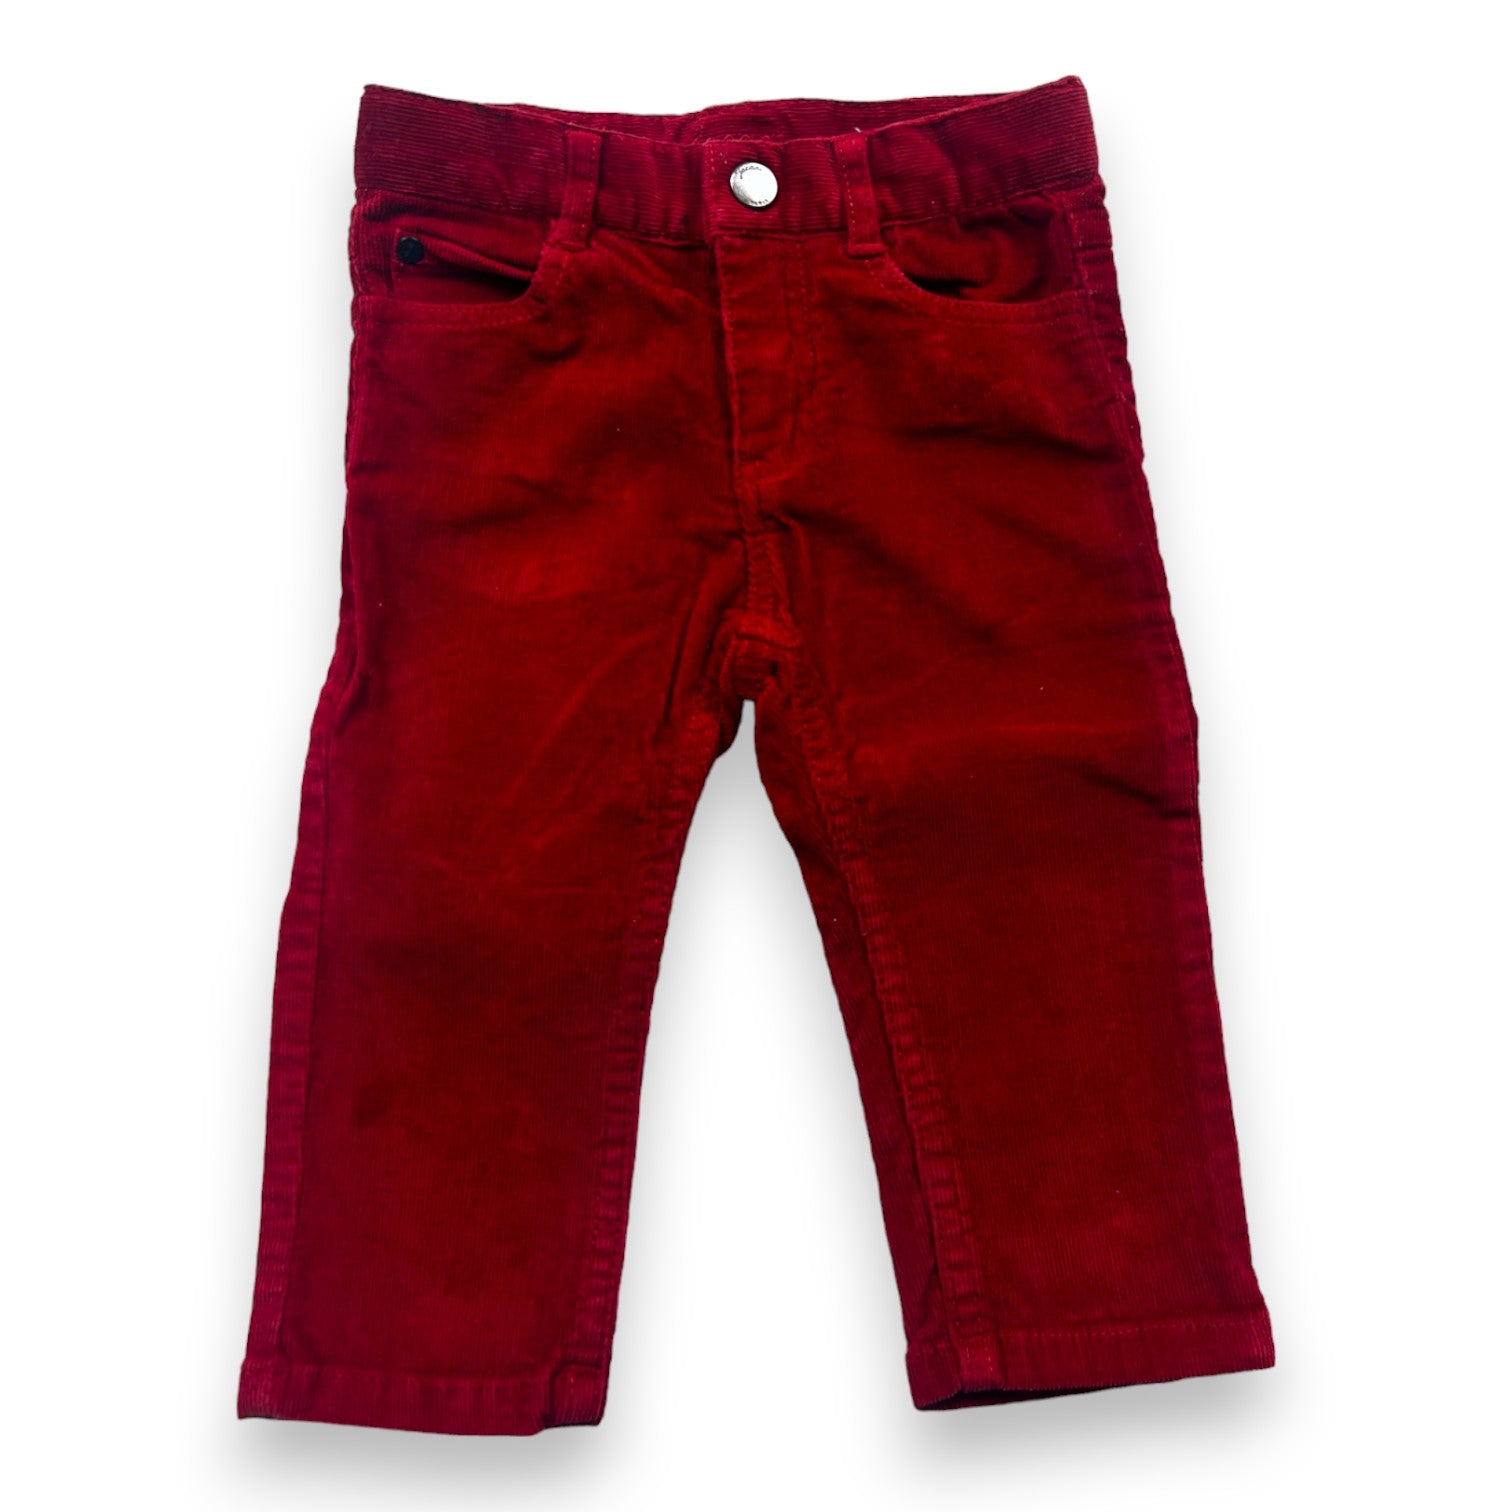 JACADI - Pantalon rouge velours - 12 mois